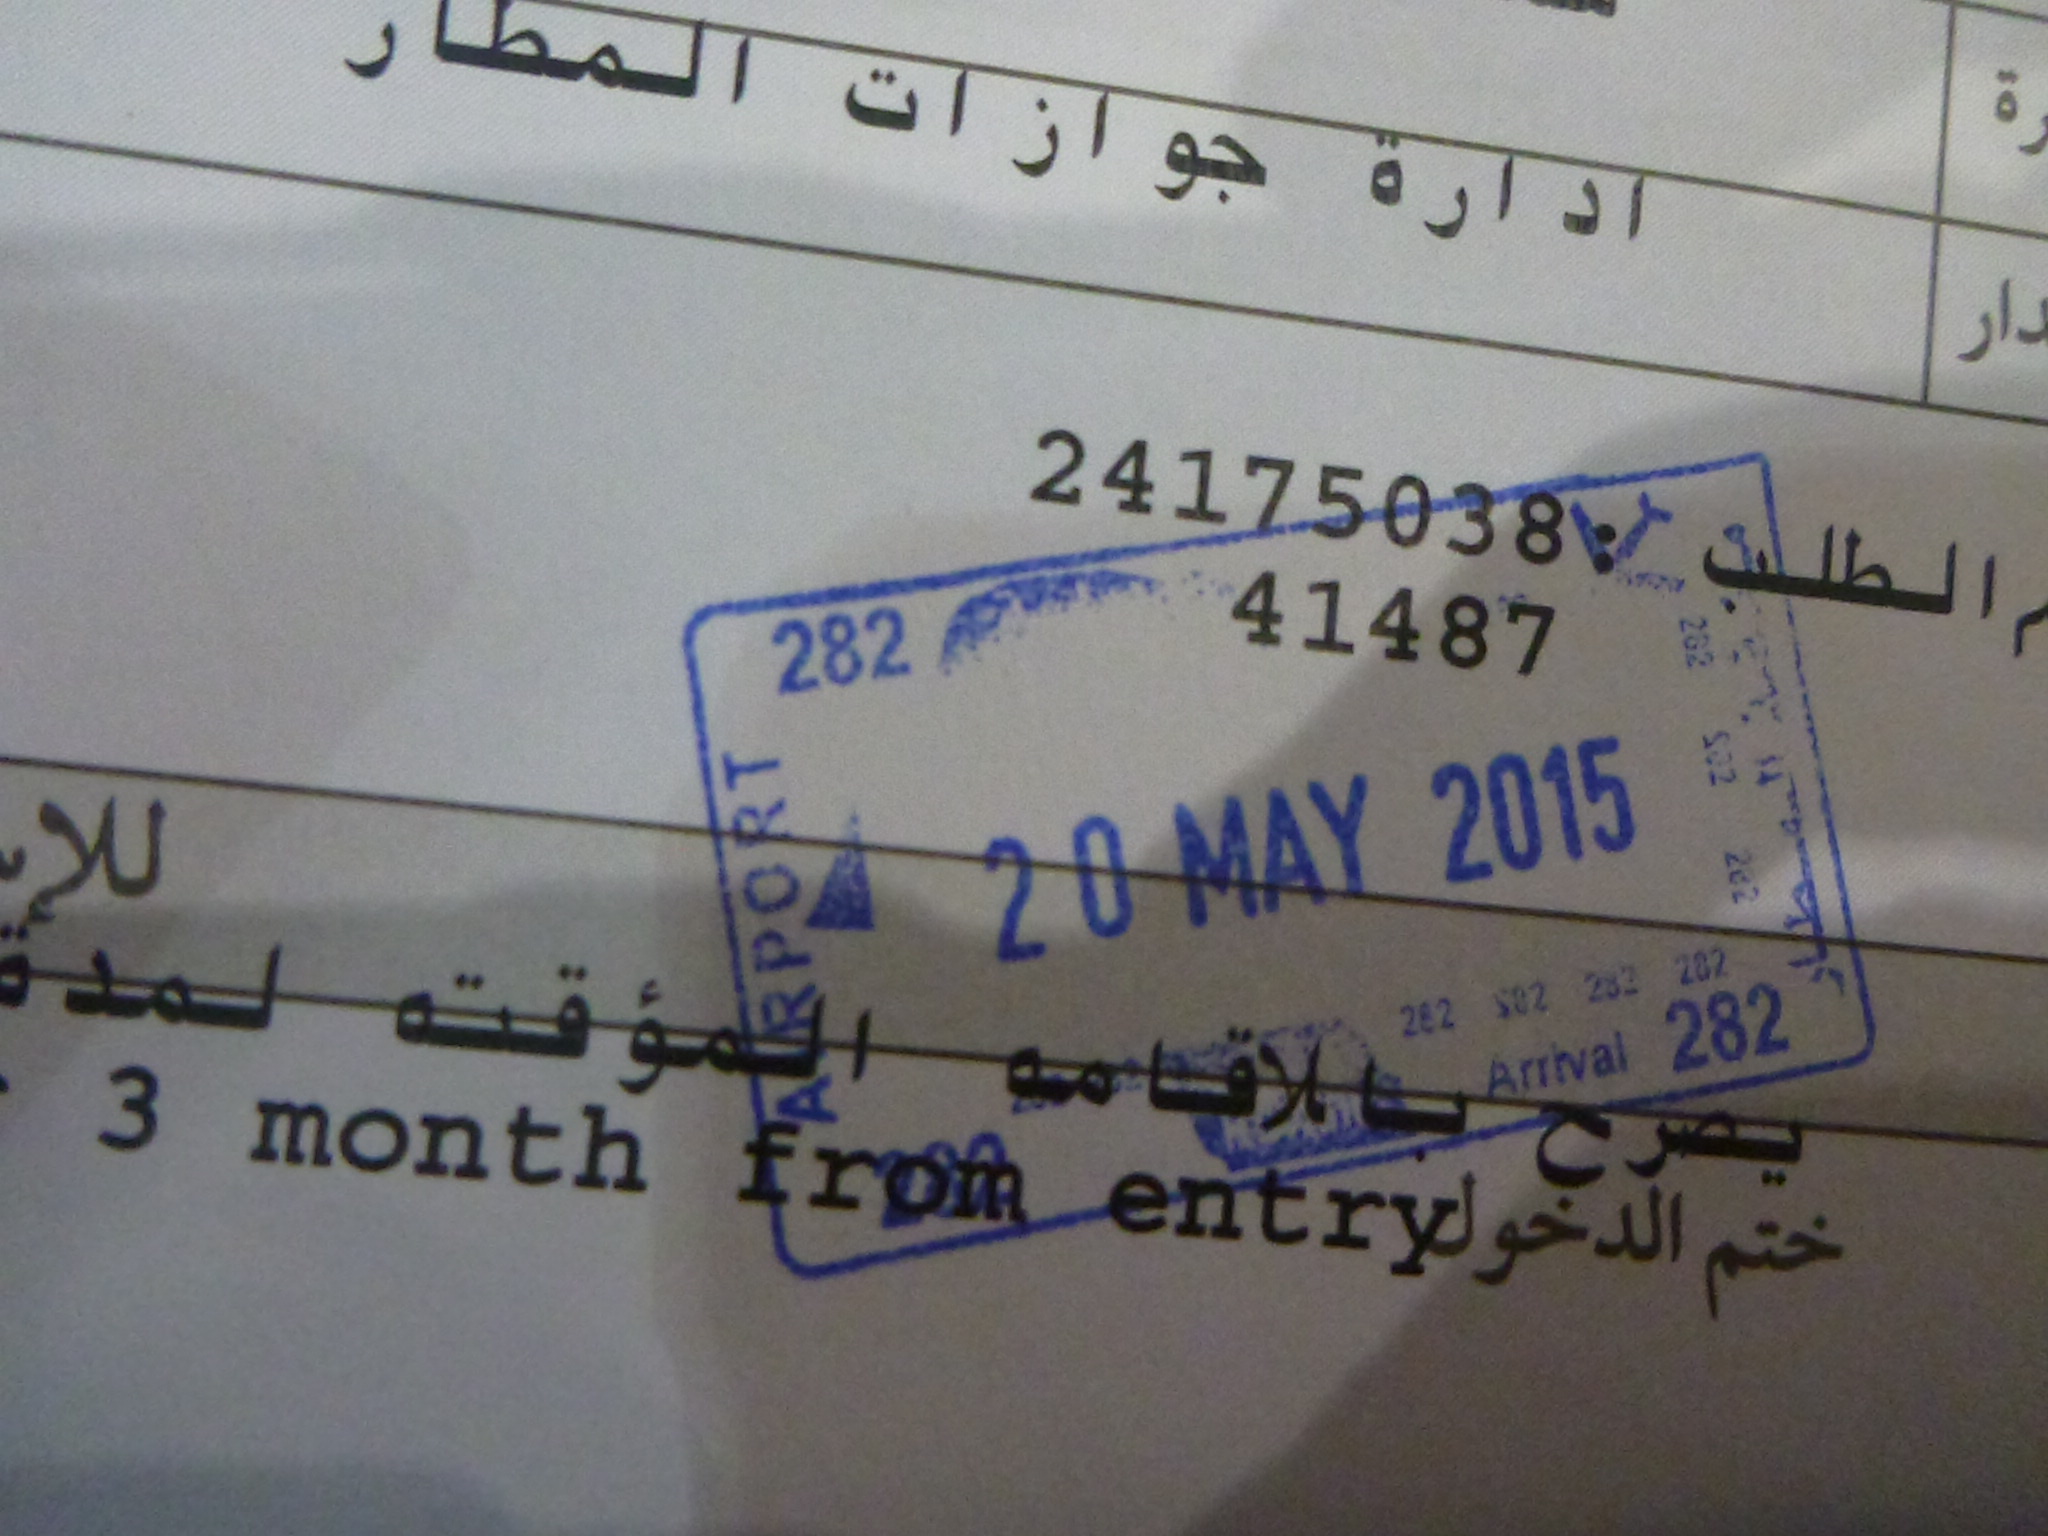 kuwait visit visa started